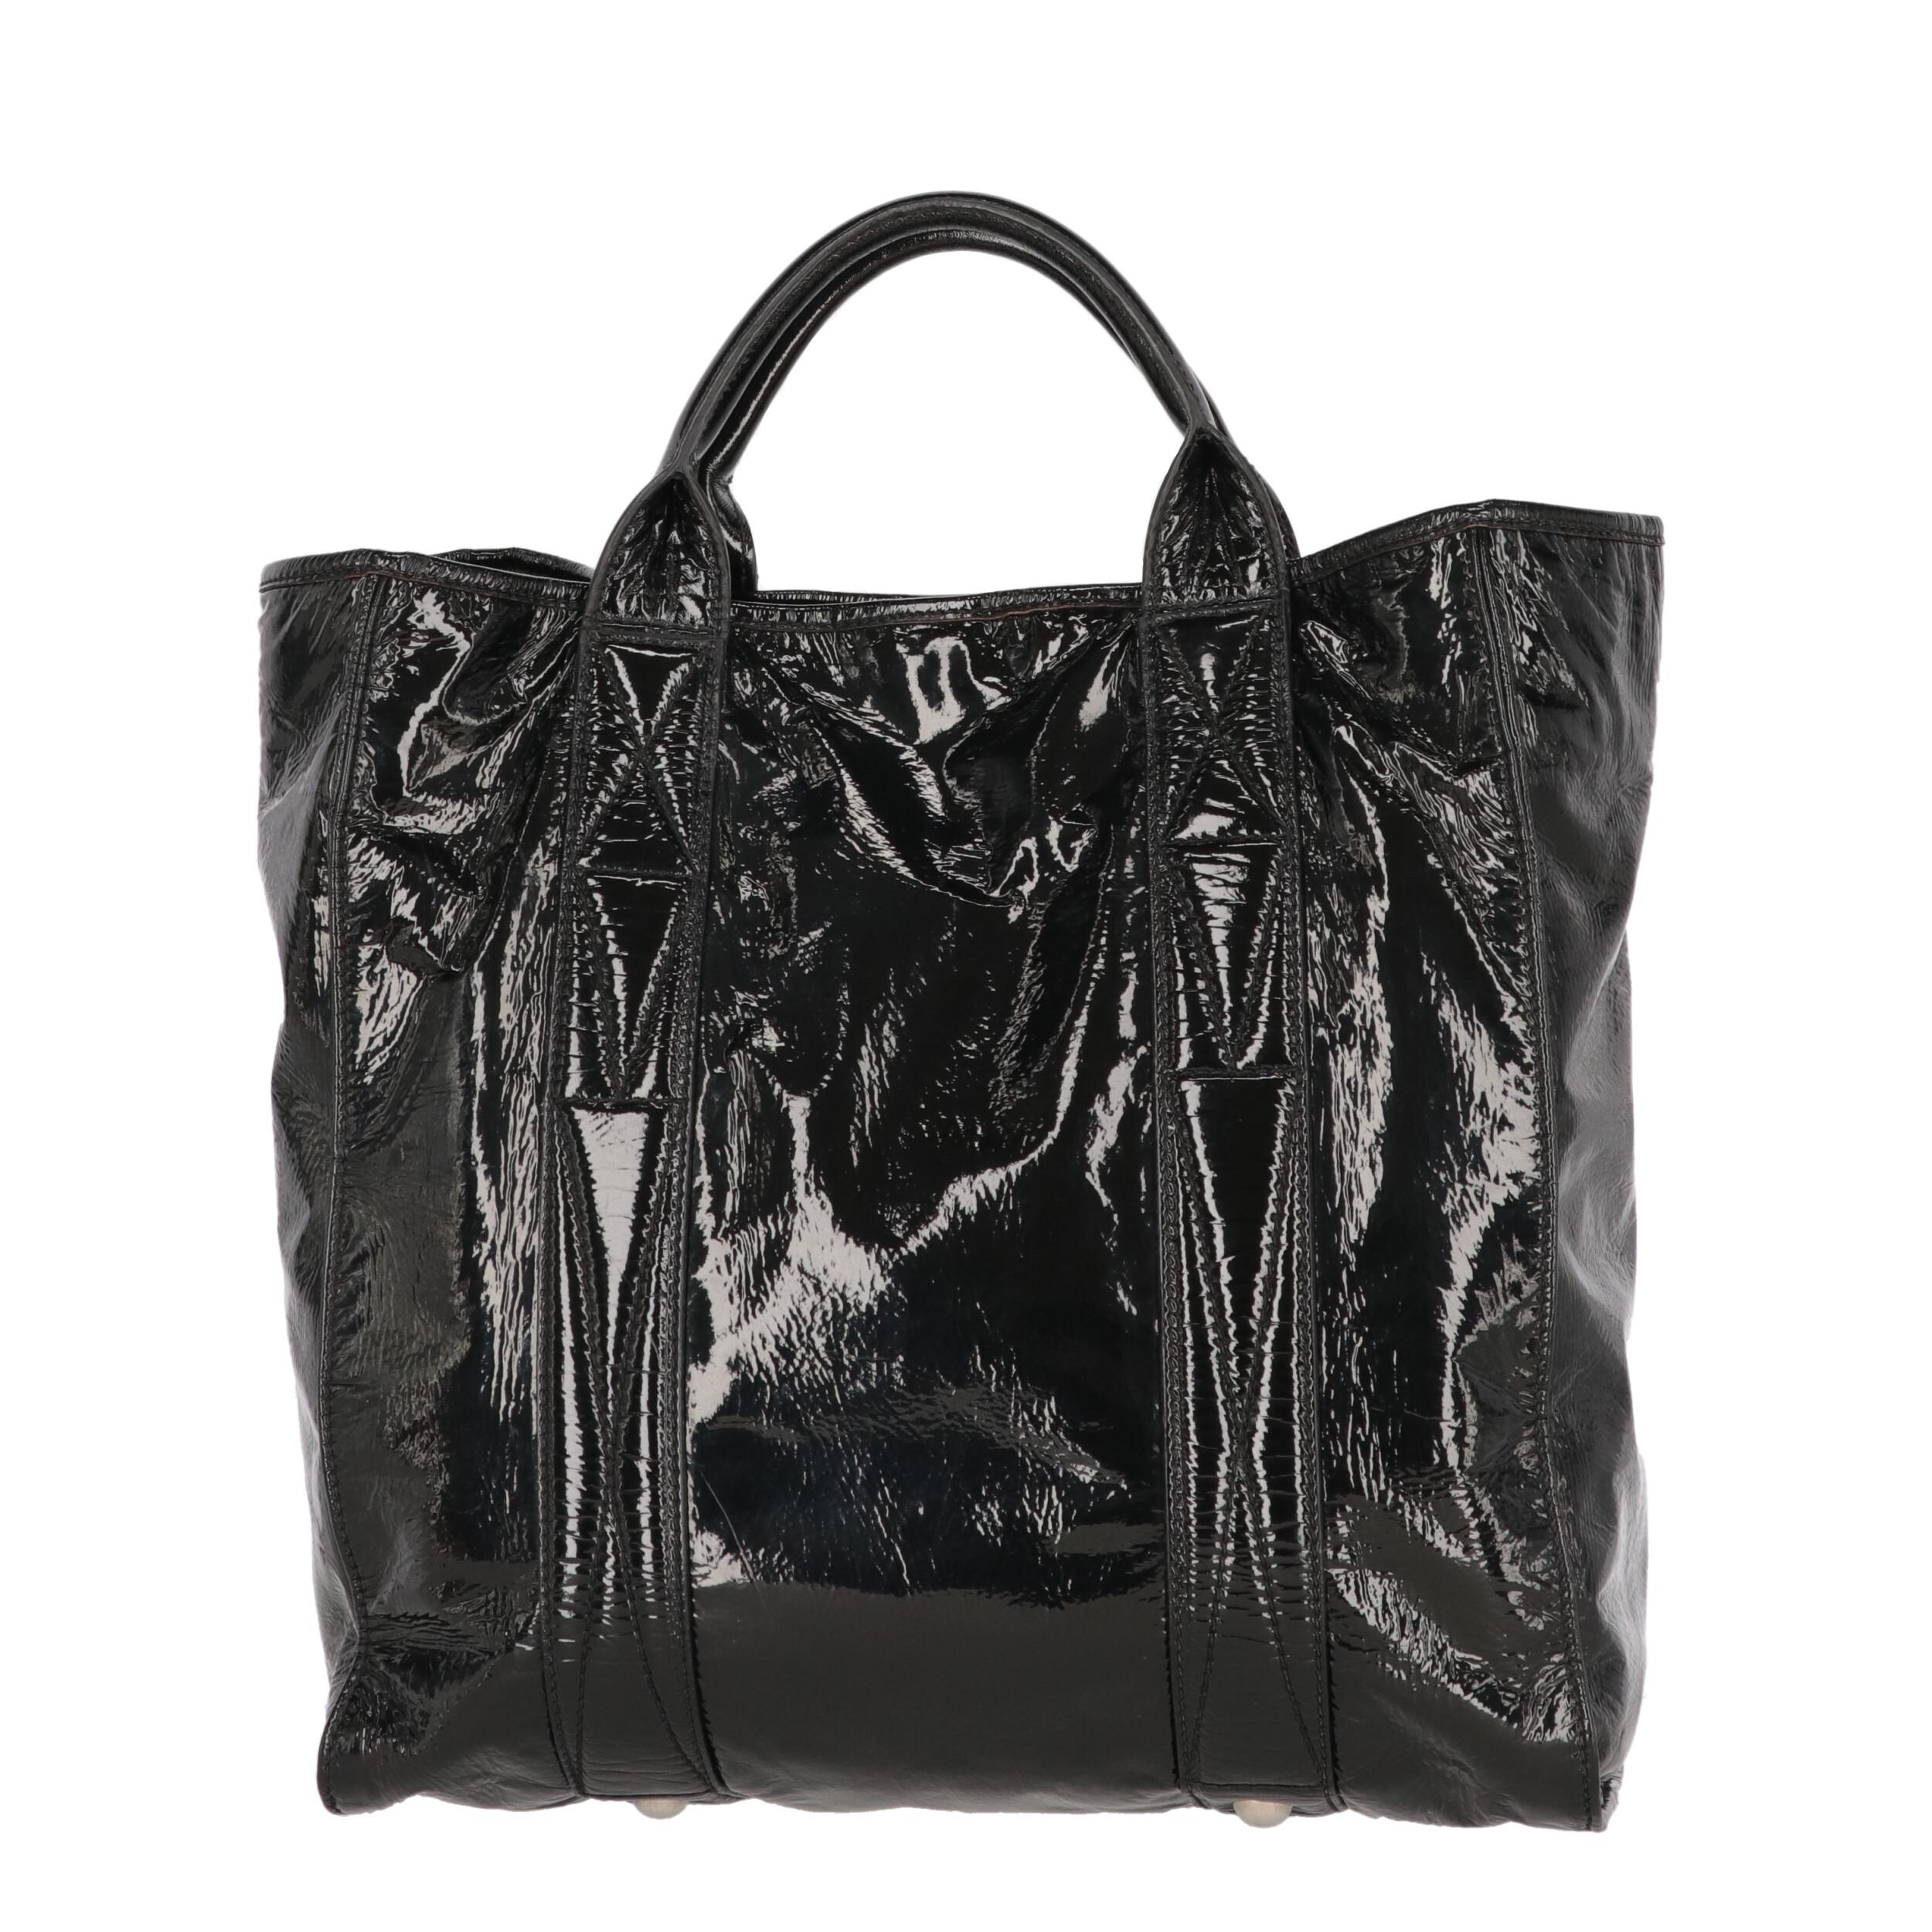 MIU MIU 90s enamel leather hand bag